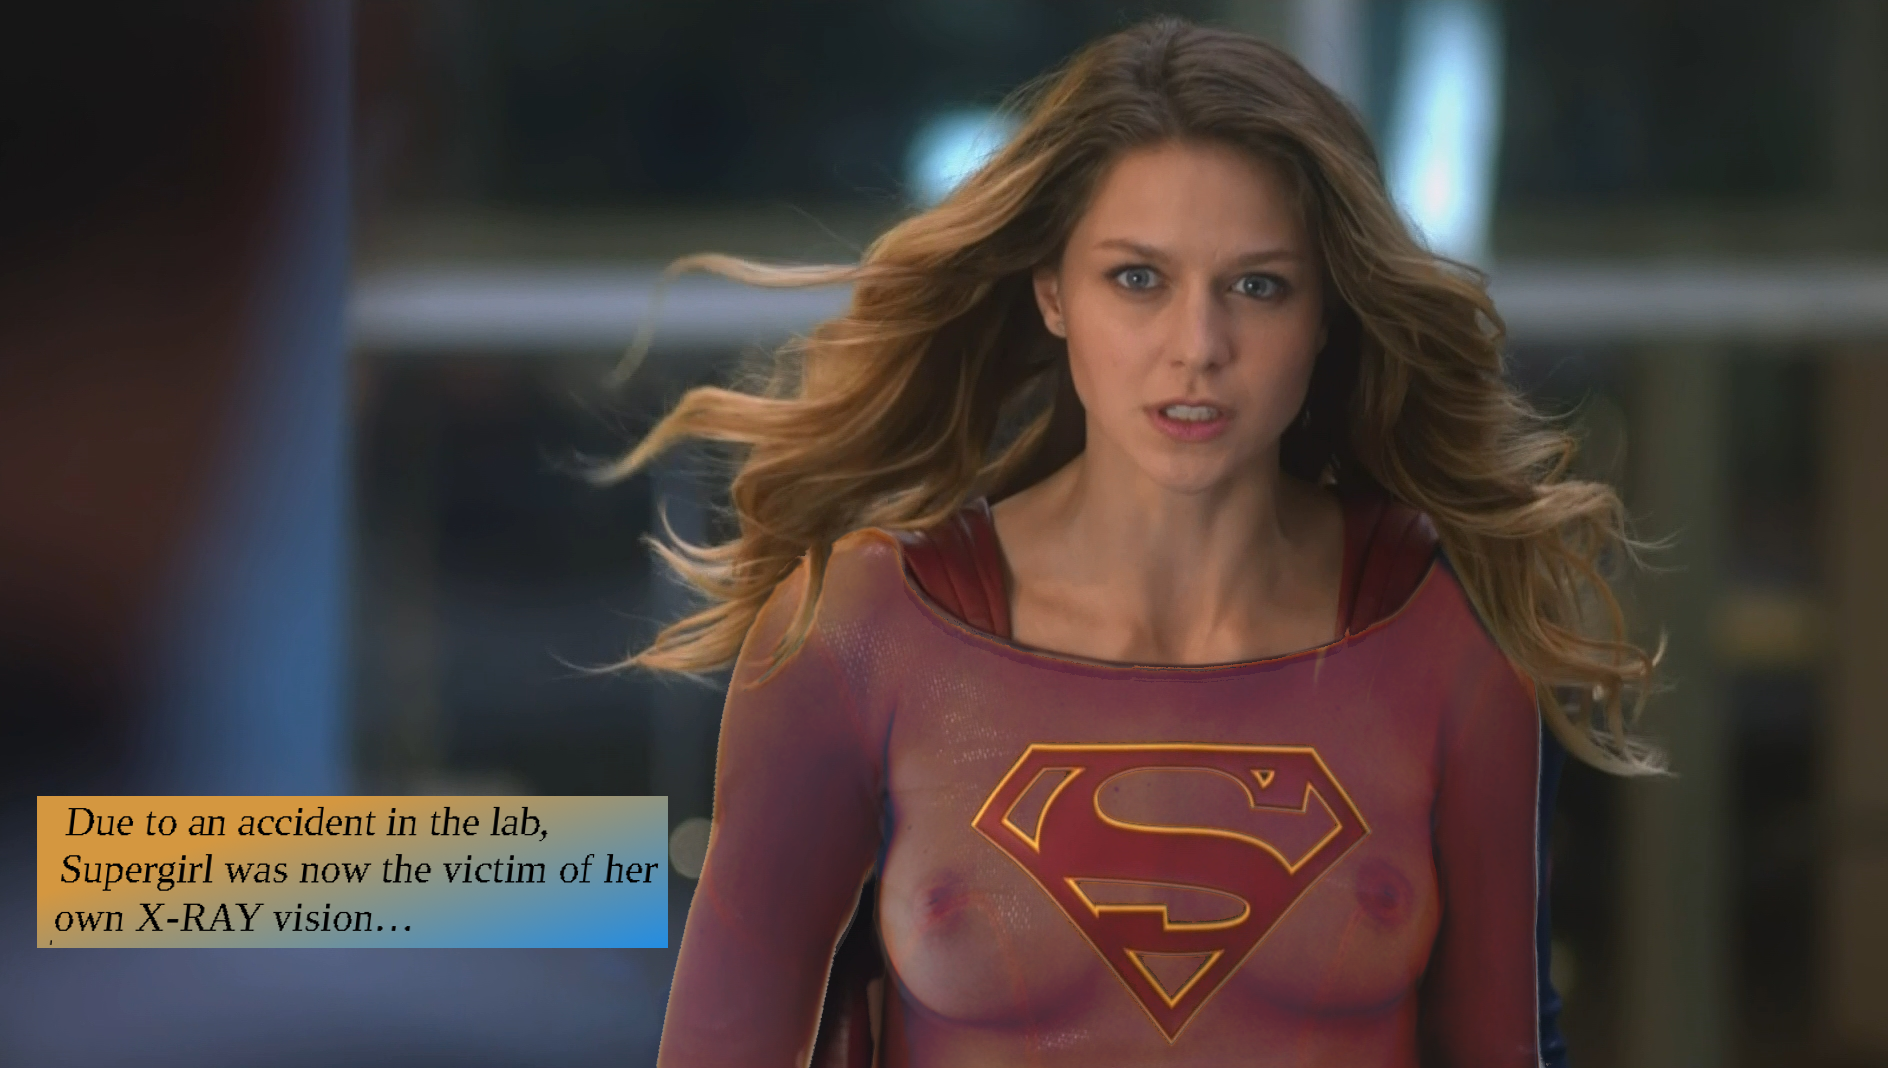 Supergirl nude wallpaper